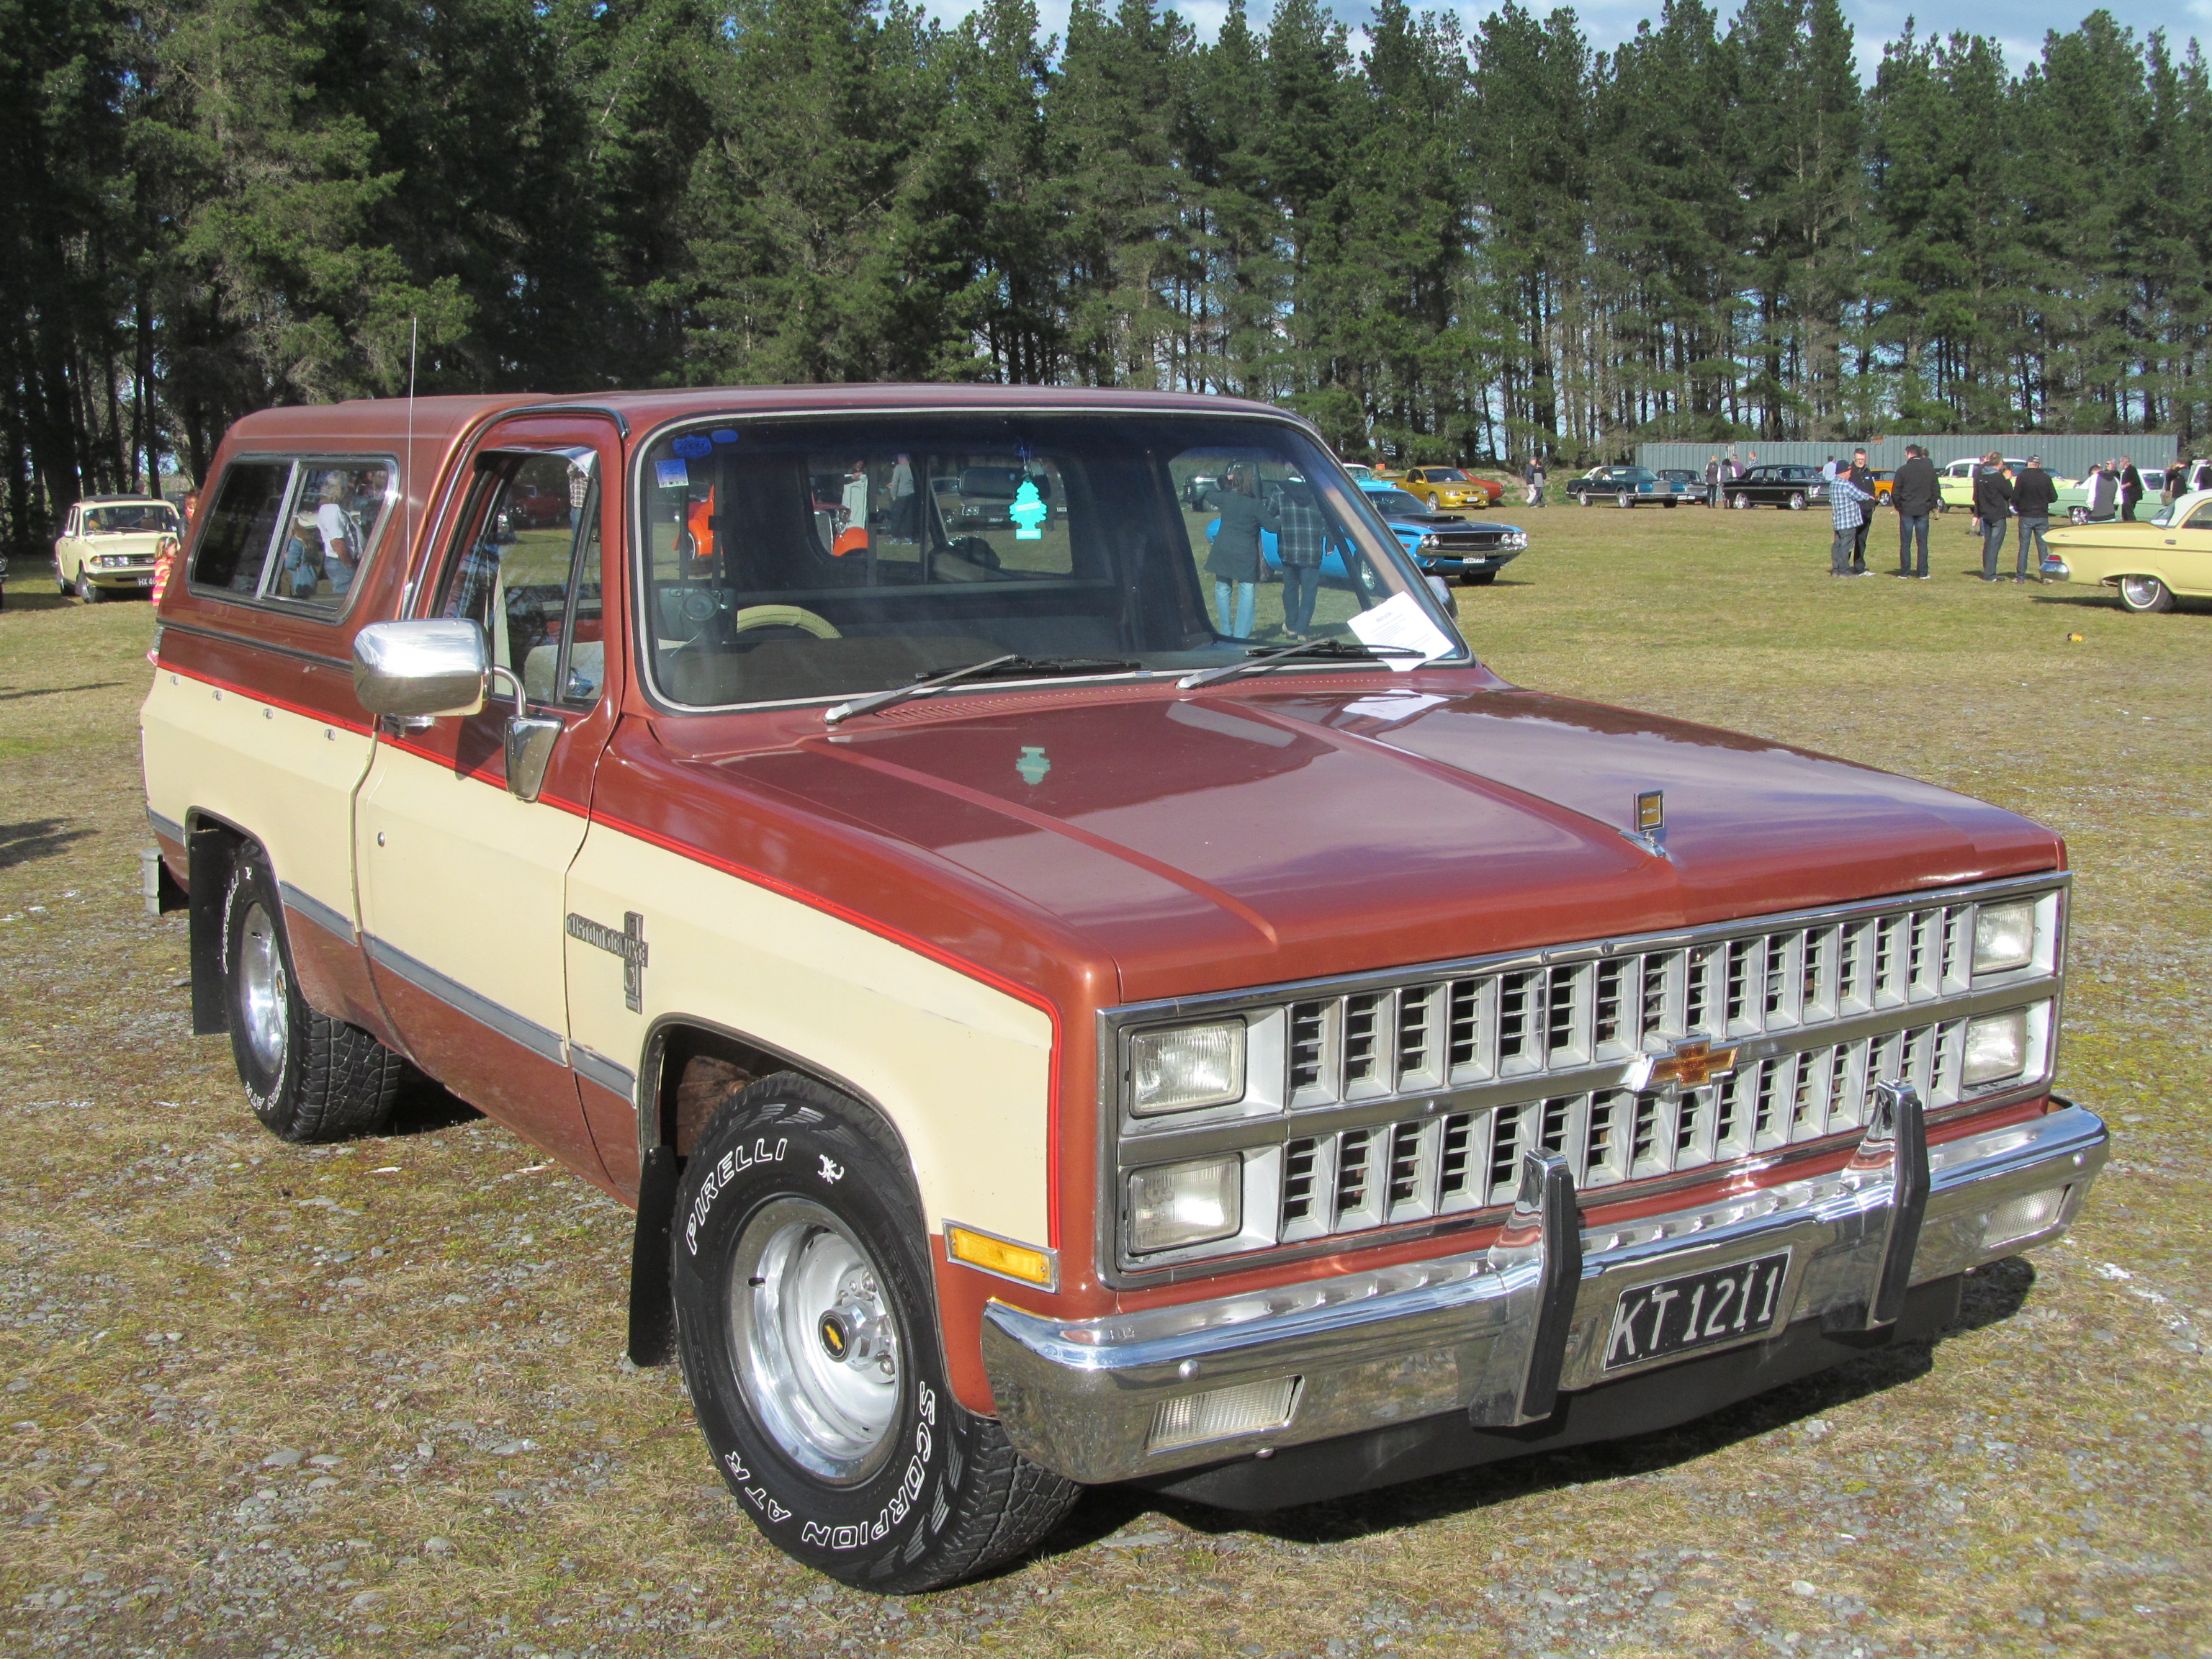 K 3 car. Chevrolet 1983. Chevrolet c/k 1981. 1983 Chevrolet c/k 10 Series. Chevrolet c10 Pickup 1981.